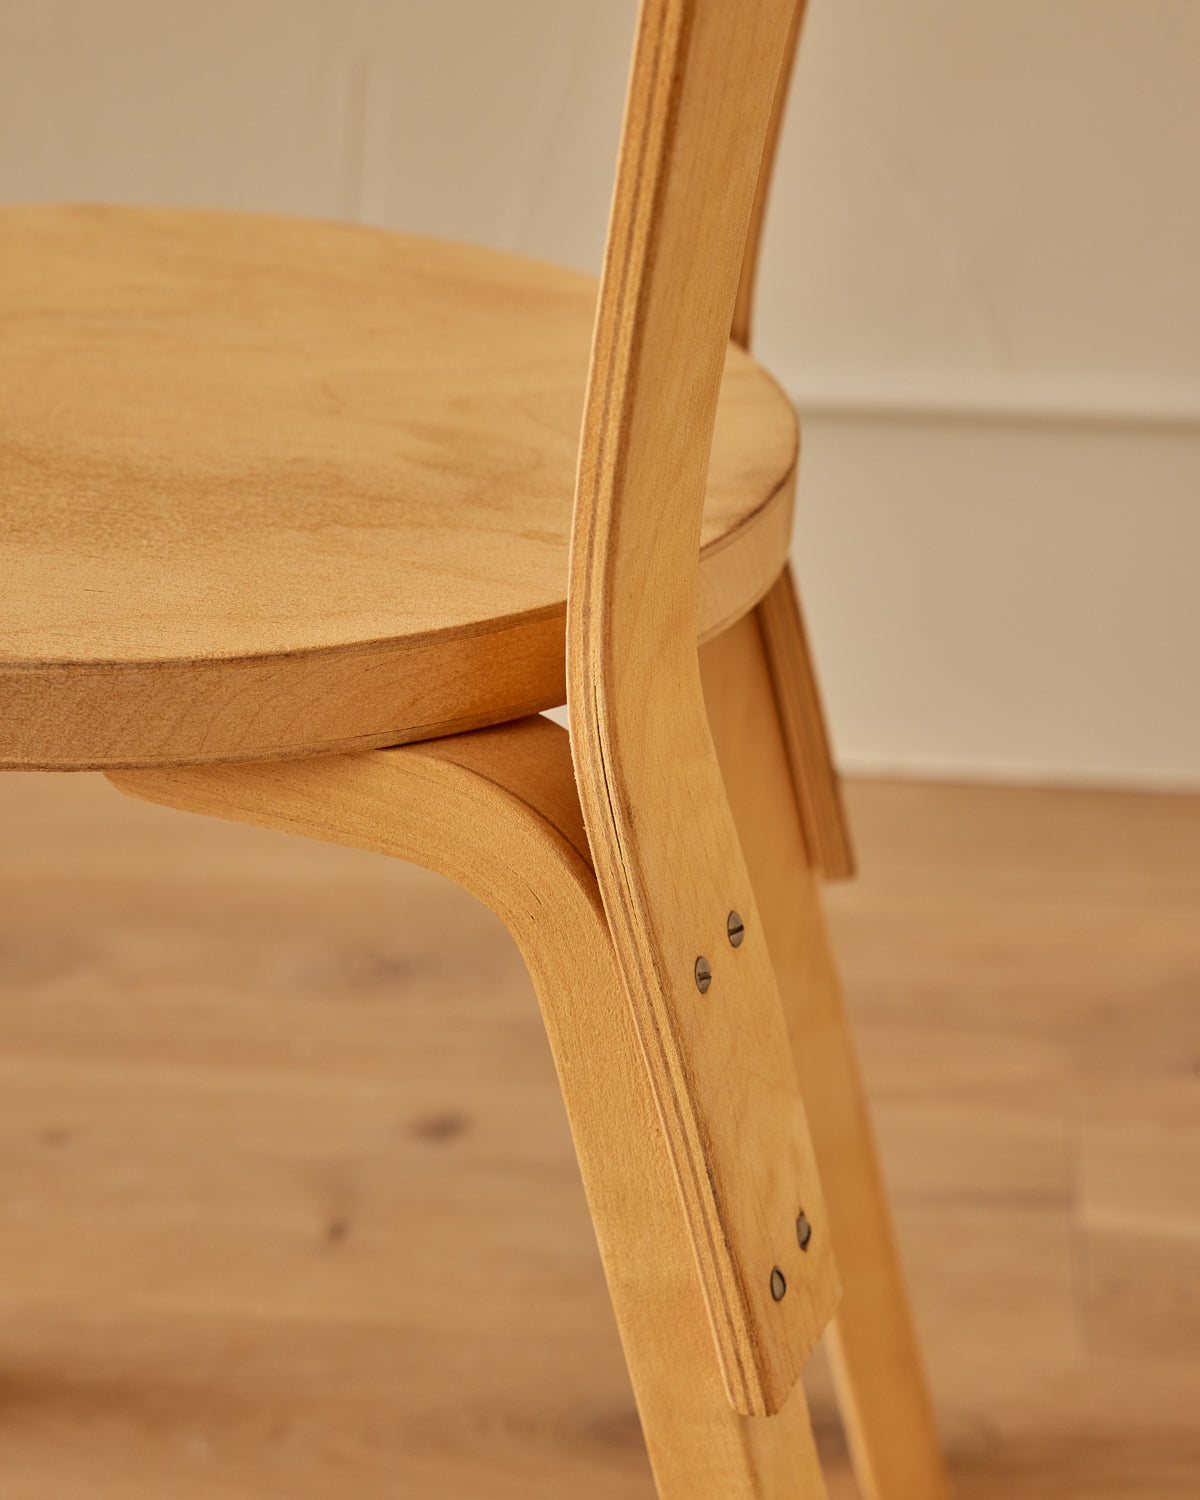 "Model 66" Chairs by Alvaro Aalto